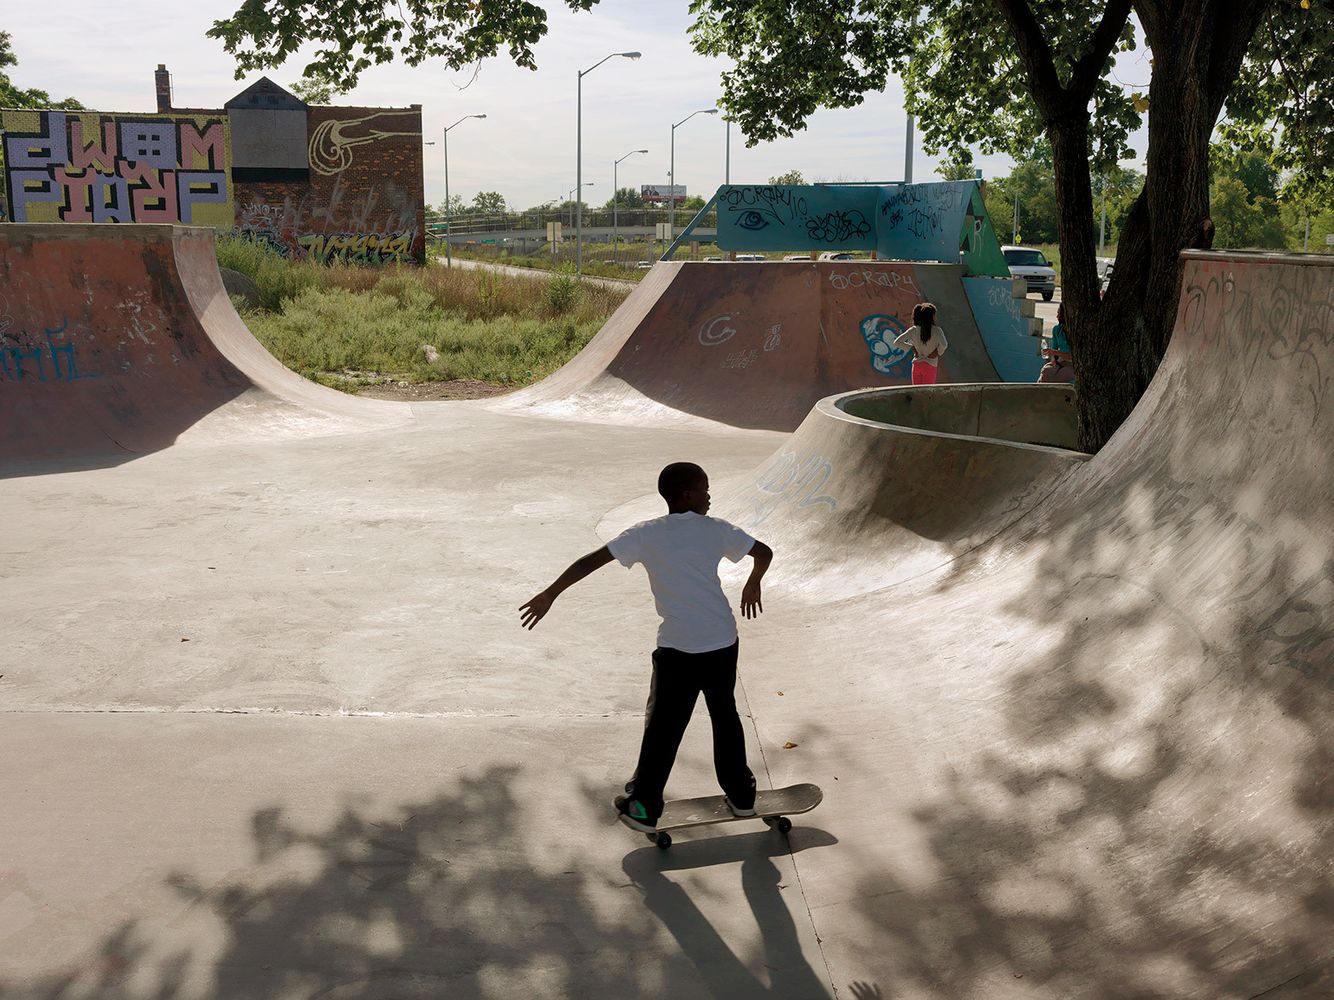 Young Boy in Skateboard Park, Eastside, Detroit 2013